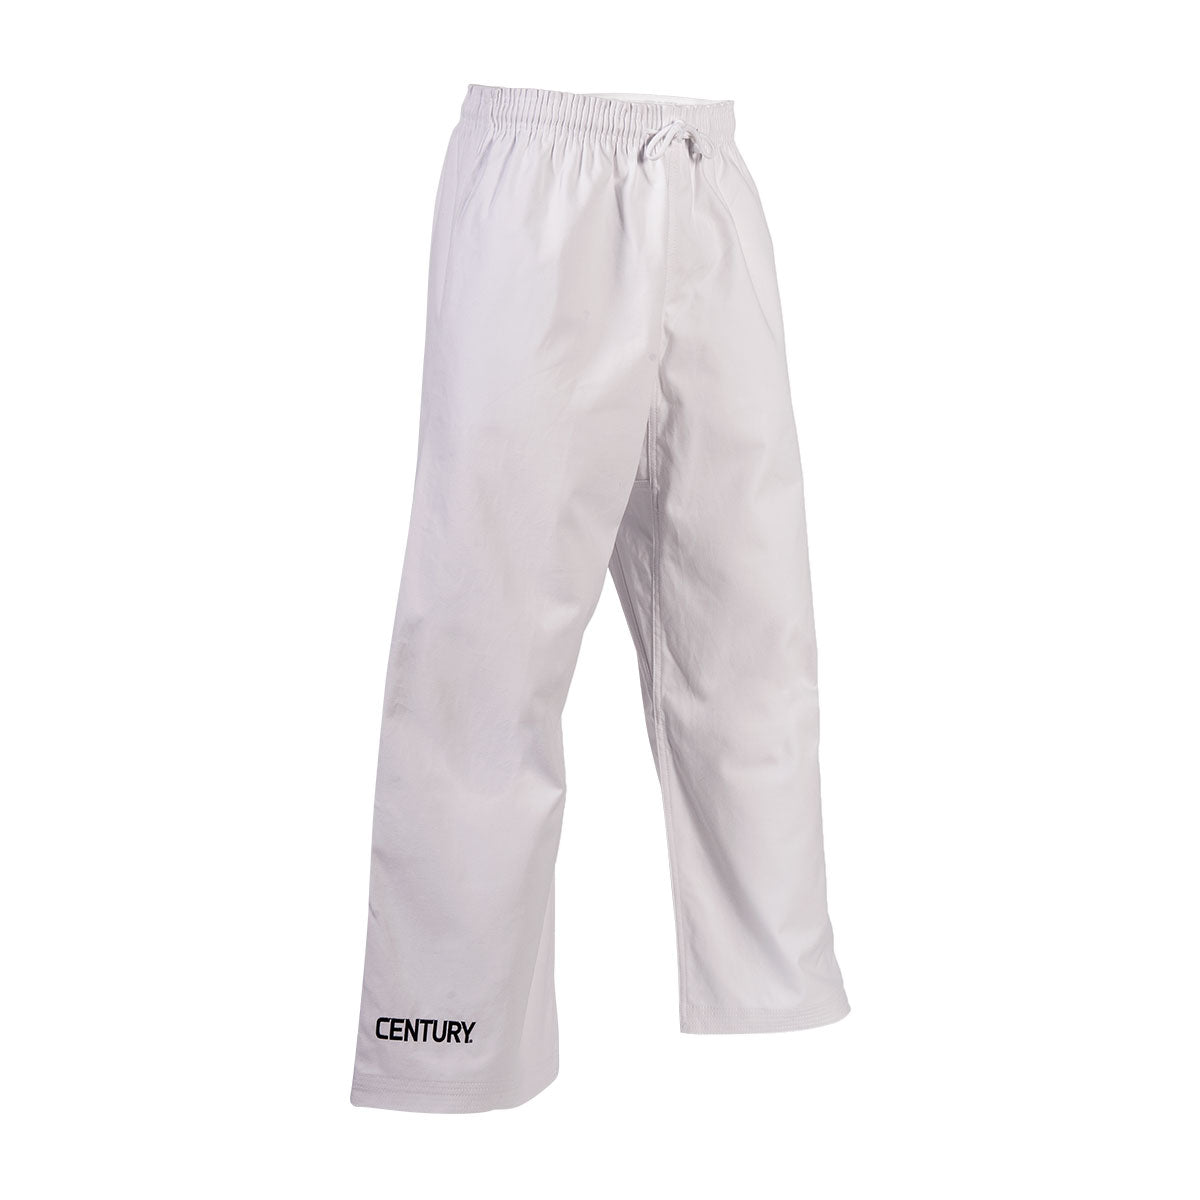 Elastic abundant pants - white